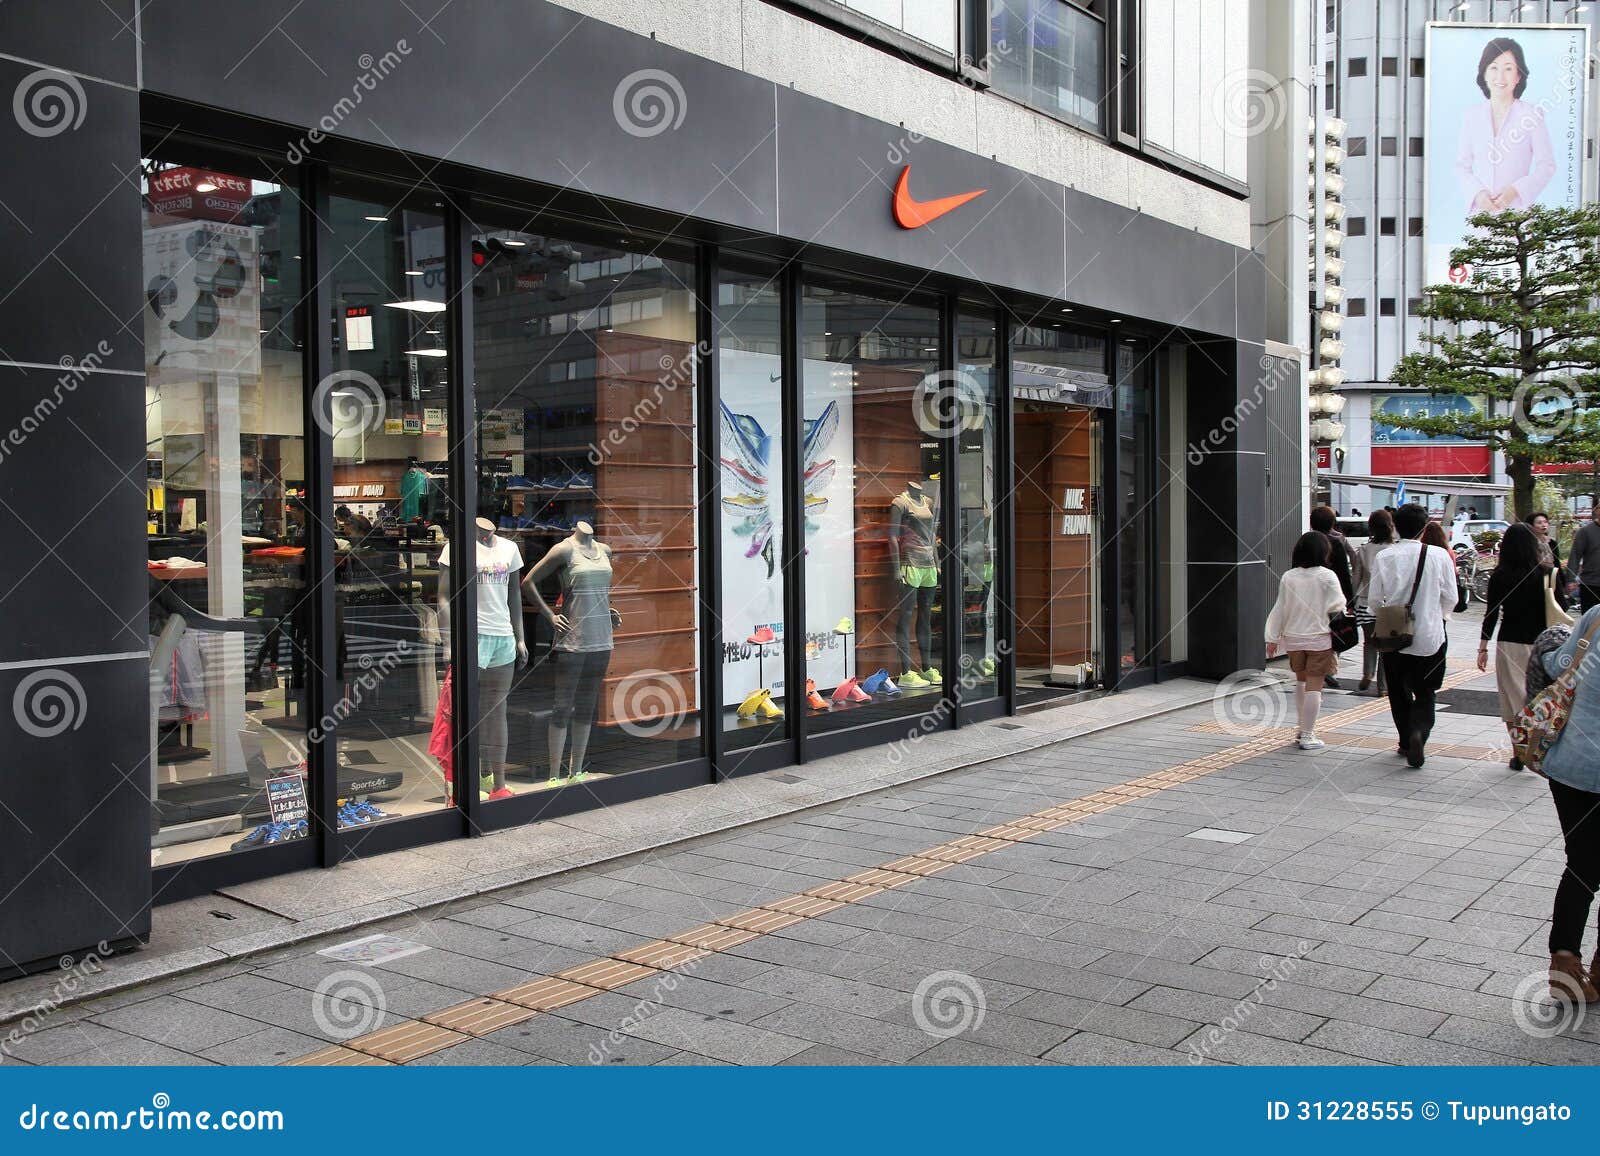 Susurro Superficie lunar Bloquear Nike Store imagen editorial. Imagen de deportes, comercial - 31228555